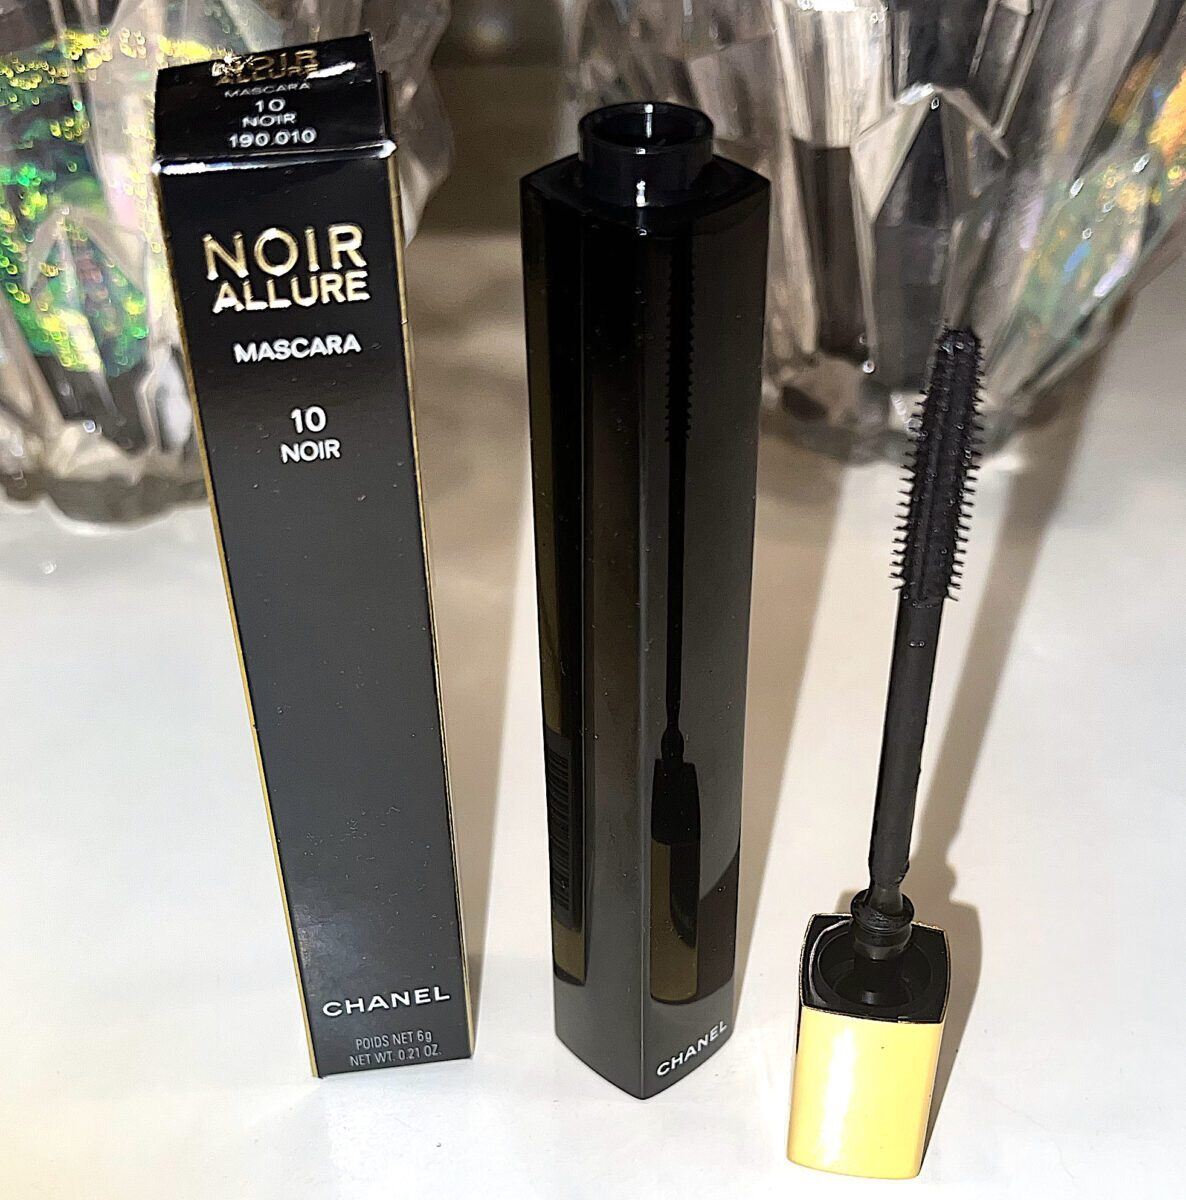 Bill Pháp] Mascara Chanel Noir Allure all-in-one 10 Noir 6g. Màu đen